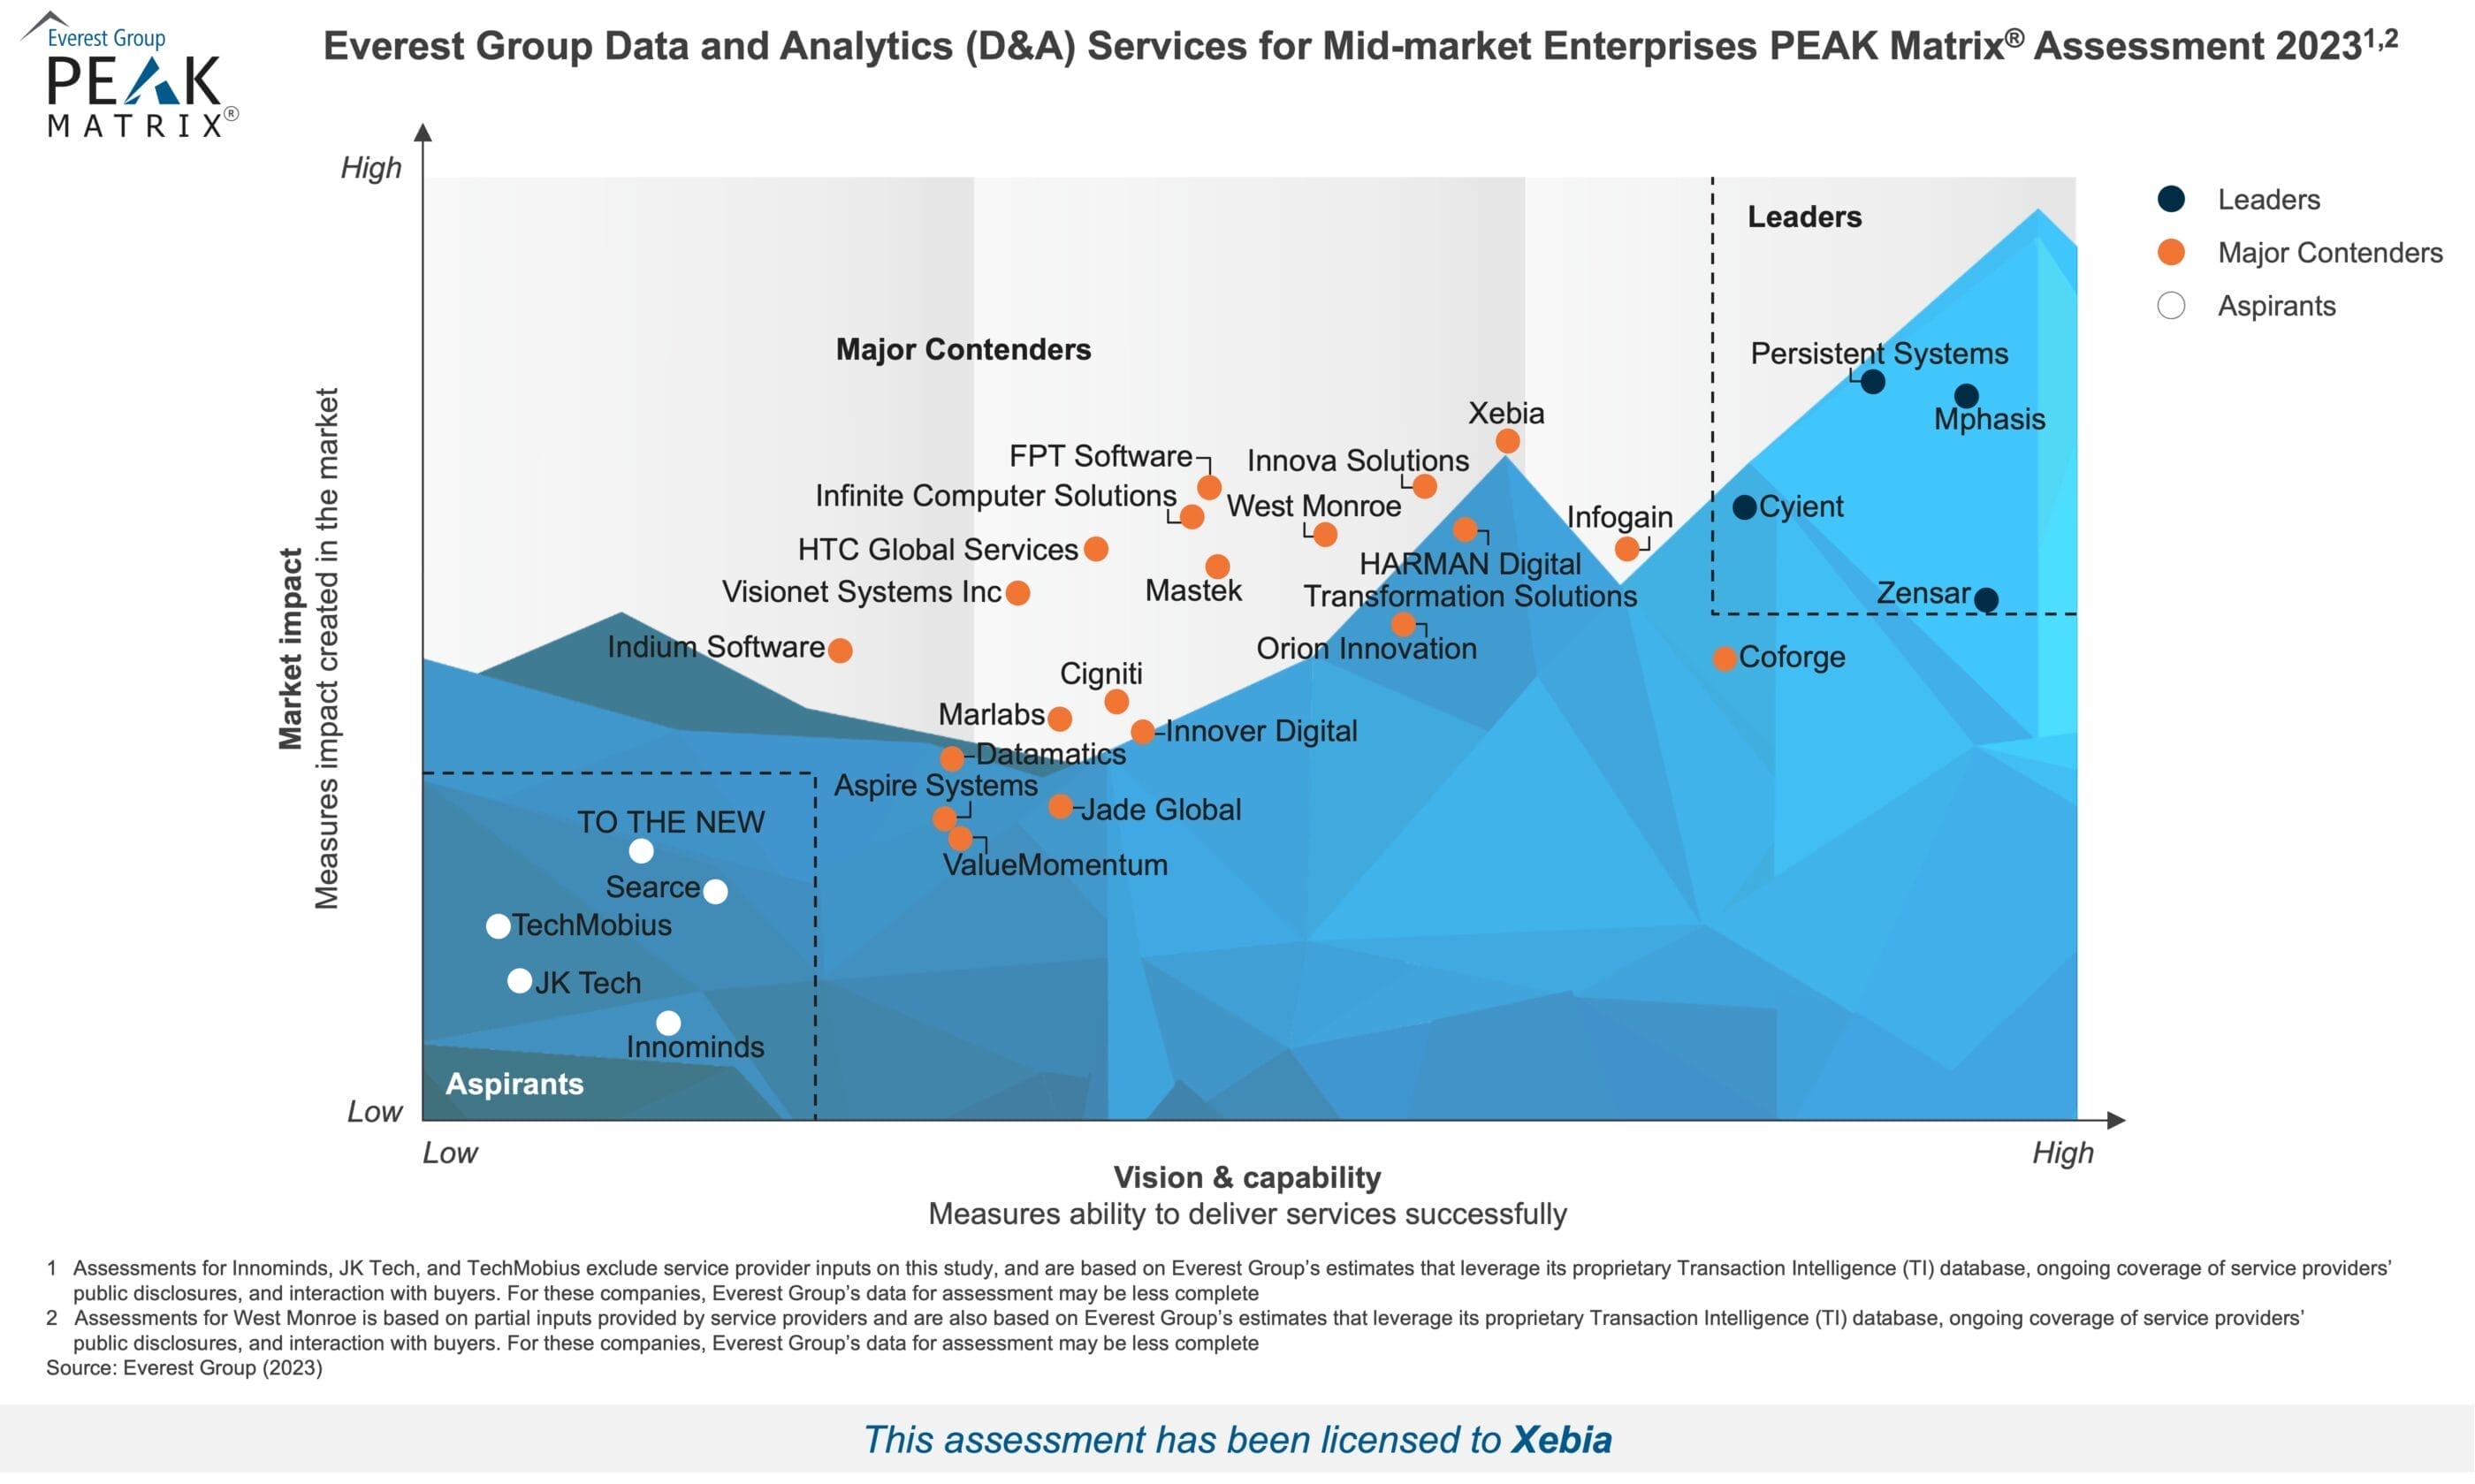 Everest Group Data and Analytics (D&A) Services for Mid-market Enterprises on the PEAK Matrix® Assessment 2023